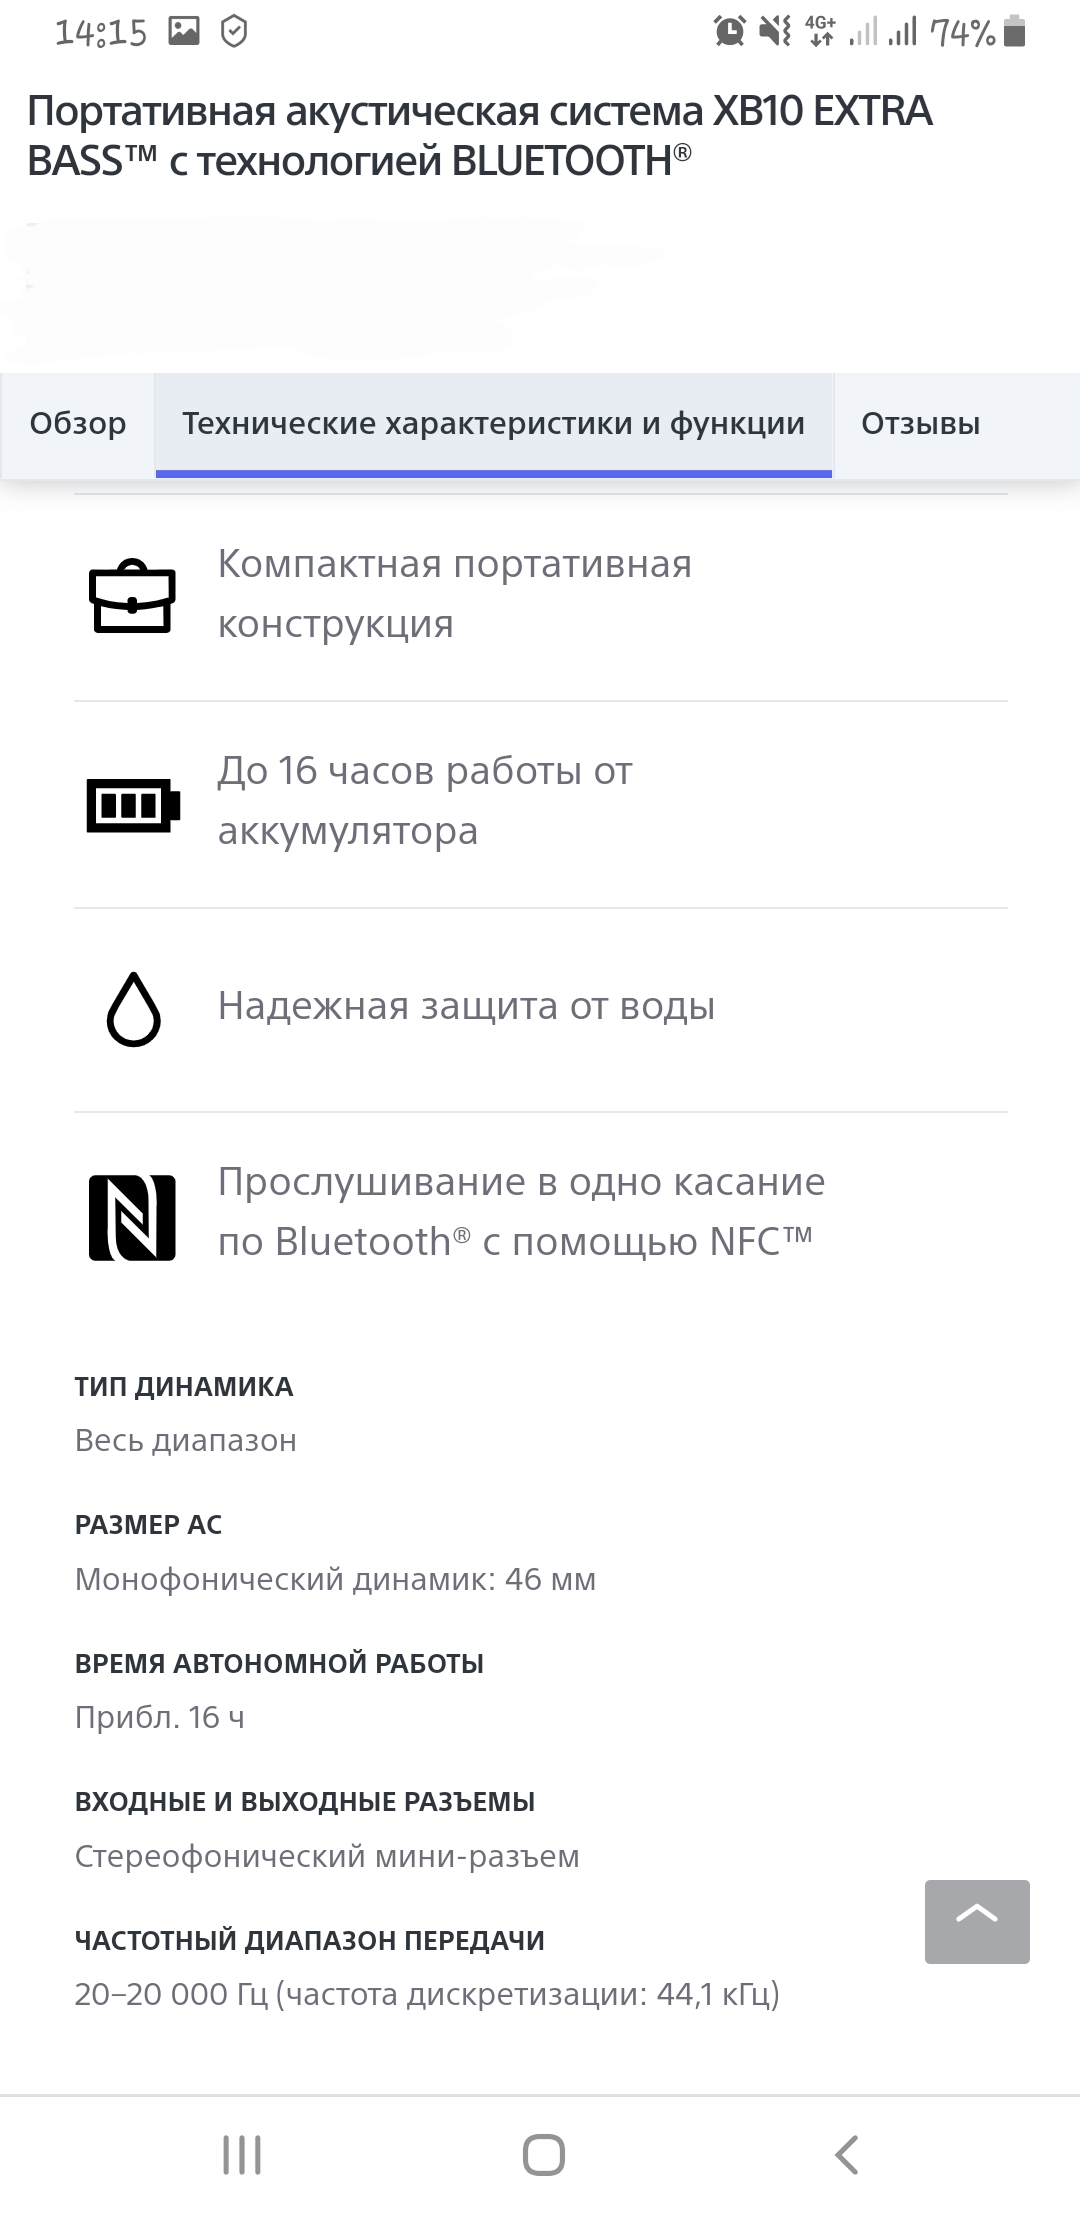 Саяногорск Инфо - screenshot_20210111-141611_chrome.jpg, Скачано: 103